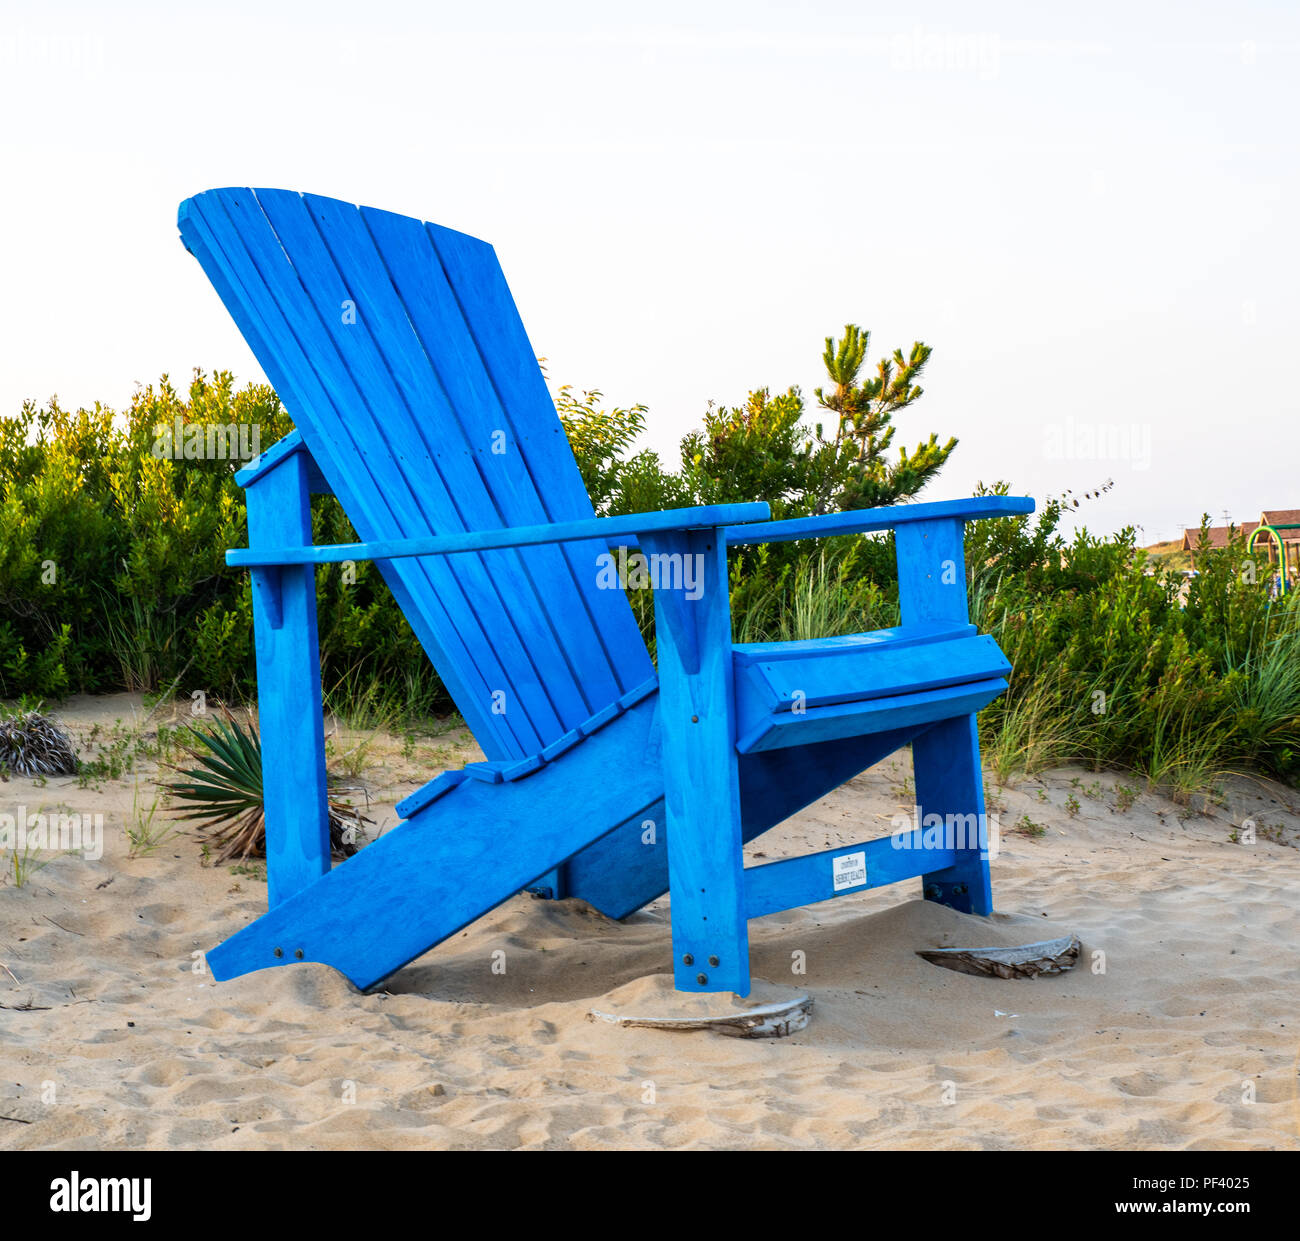 A Giant Blue Adirondack Chair At Sandbridge In Virginia Beach A Giant Blue Adirondack Chair At Sandbridge In Virginia Beach Stock Photo Alamy